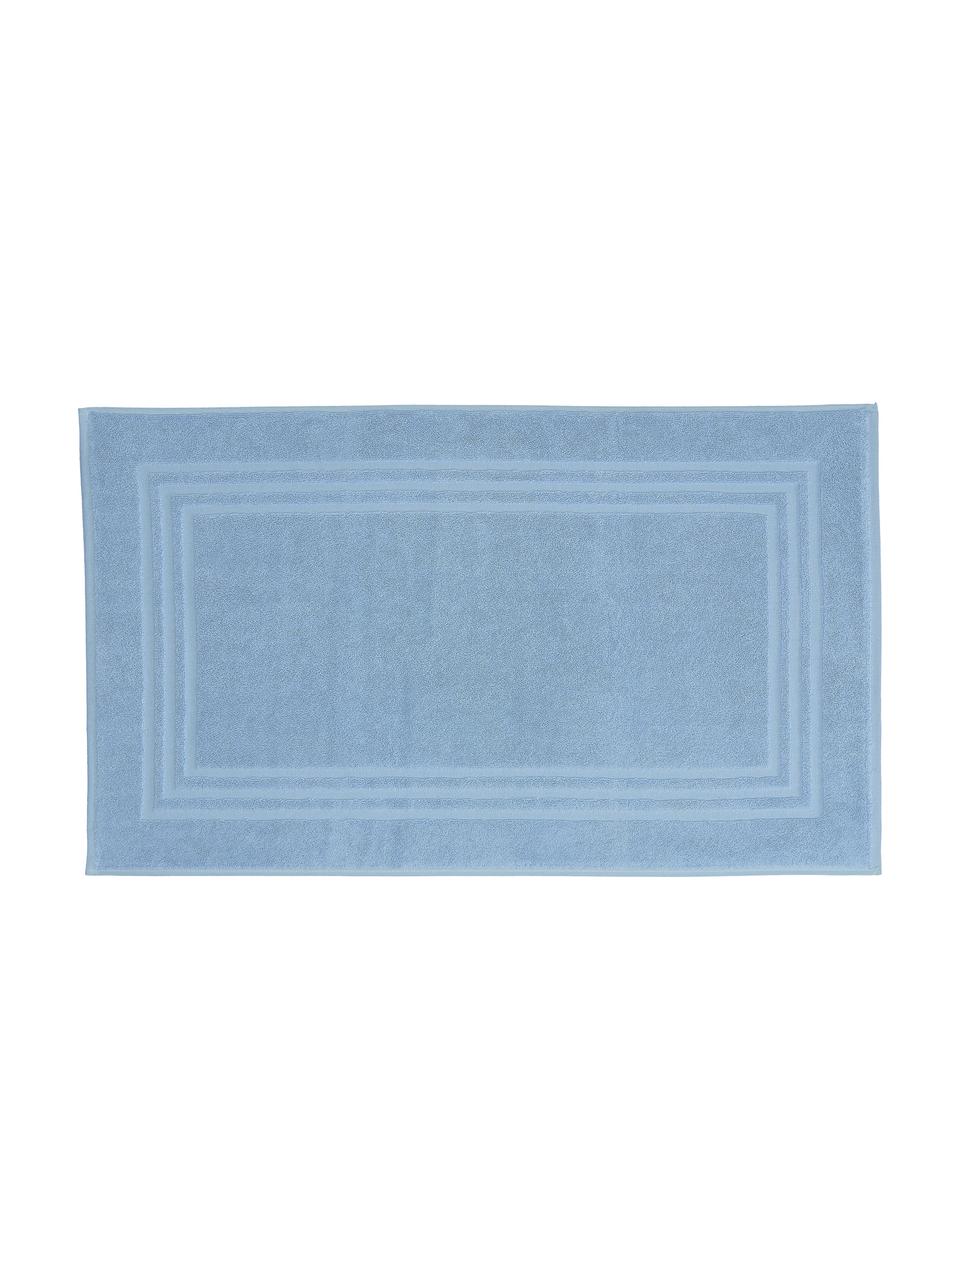 Einfarbiger Badvorleger Gentle, 100% Baumwolle, Eisblau, B 50 x L 80 cm